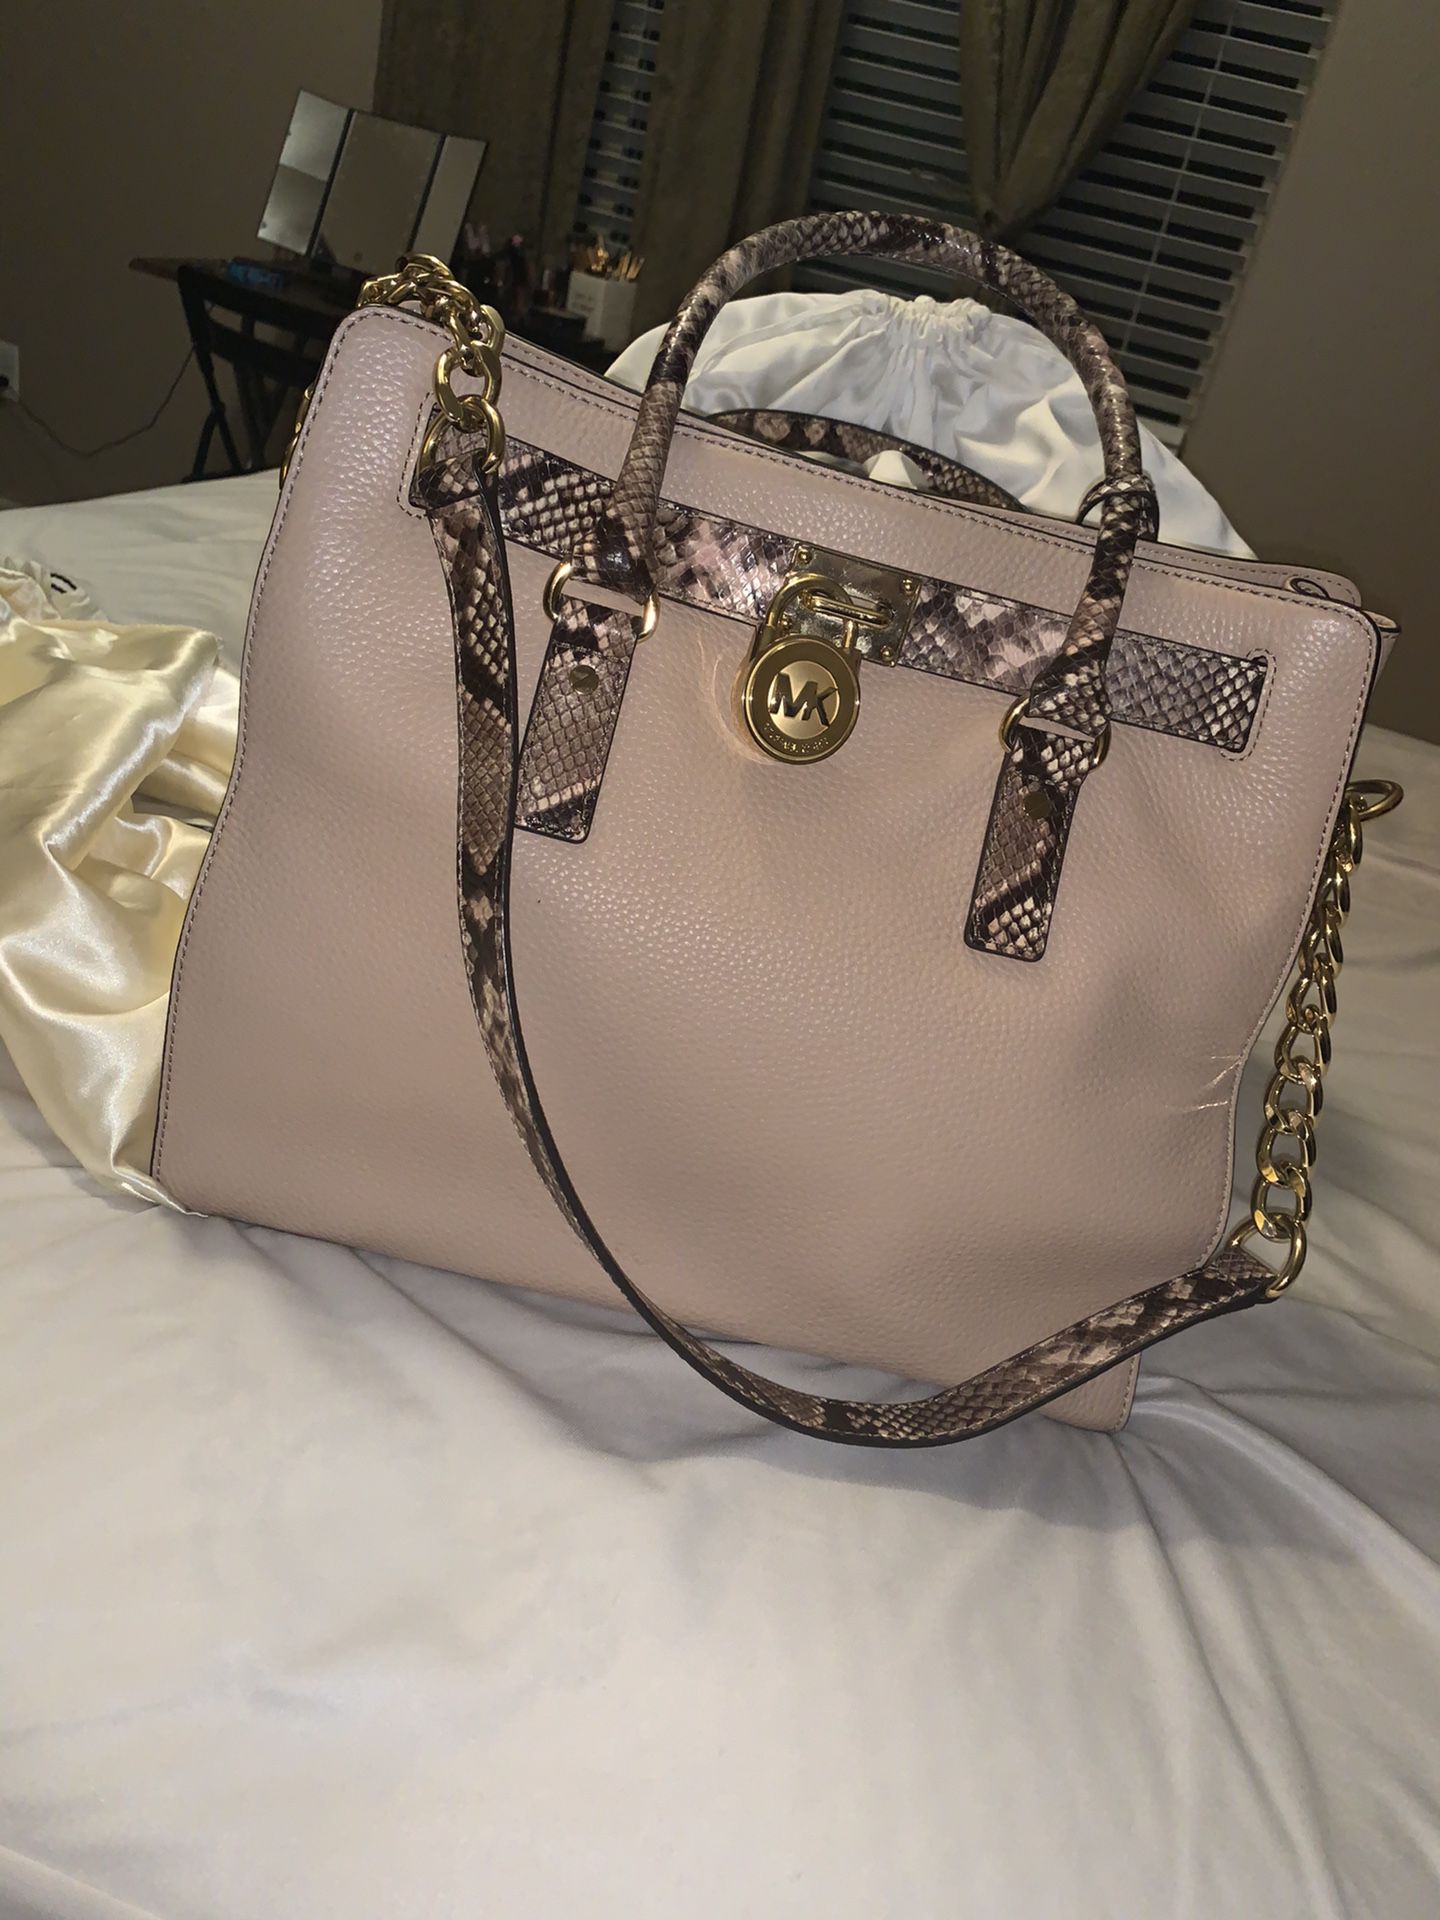 Authentic MK purse